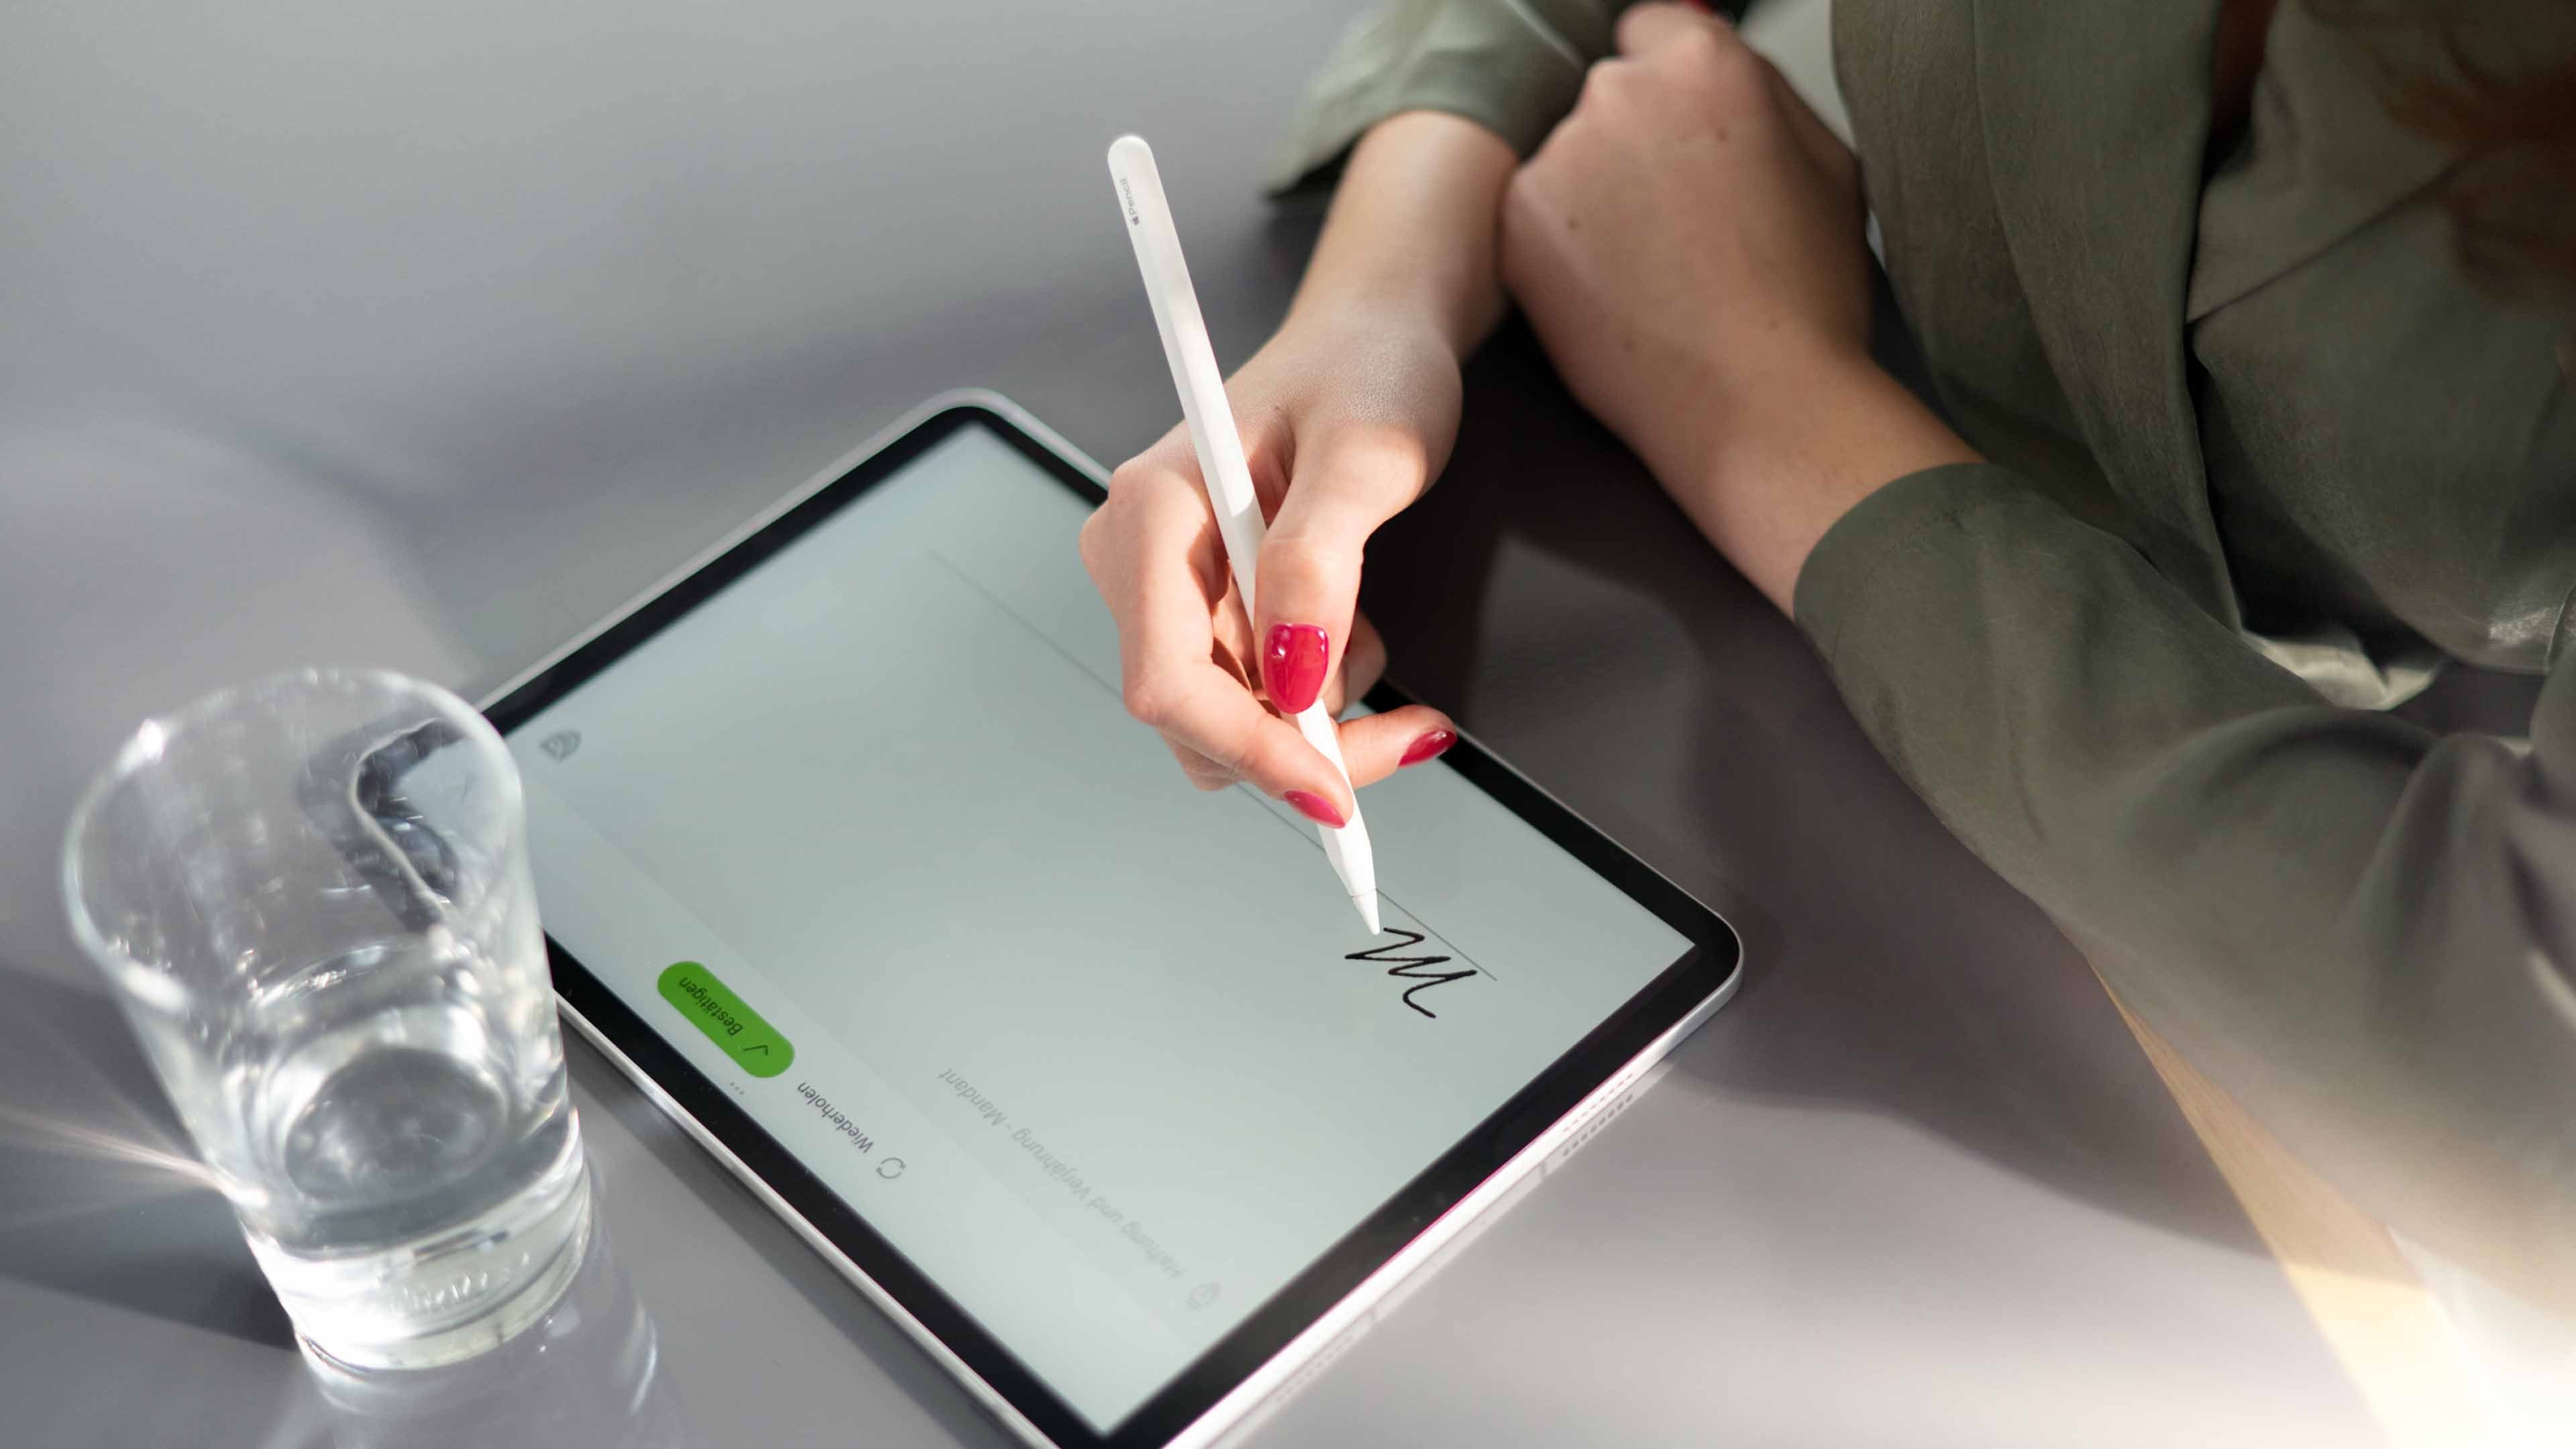 A digital signature on a tablet